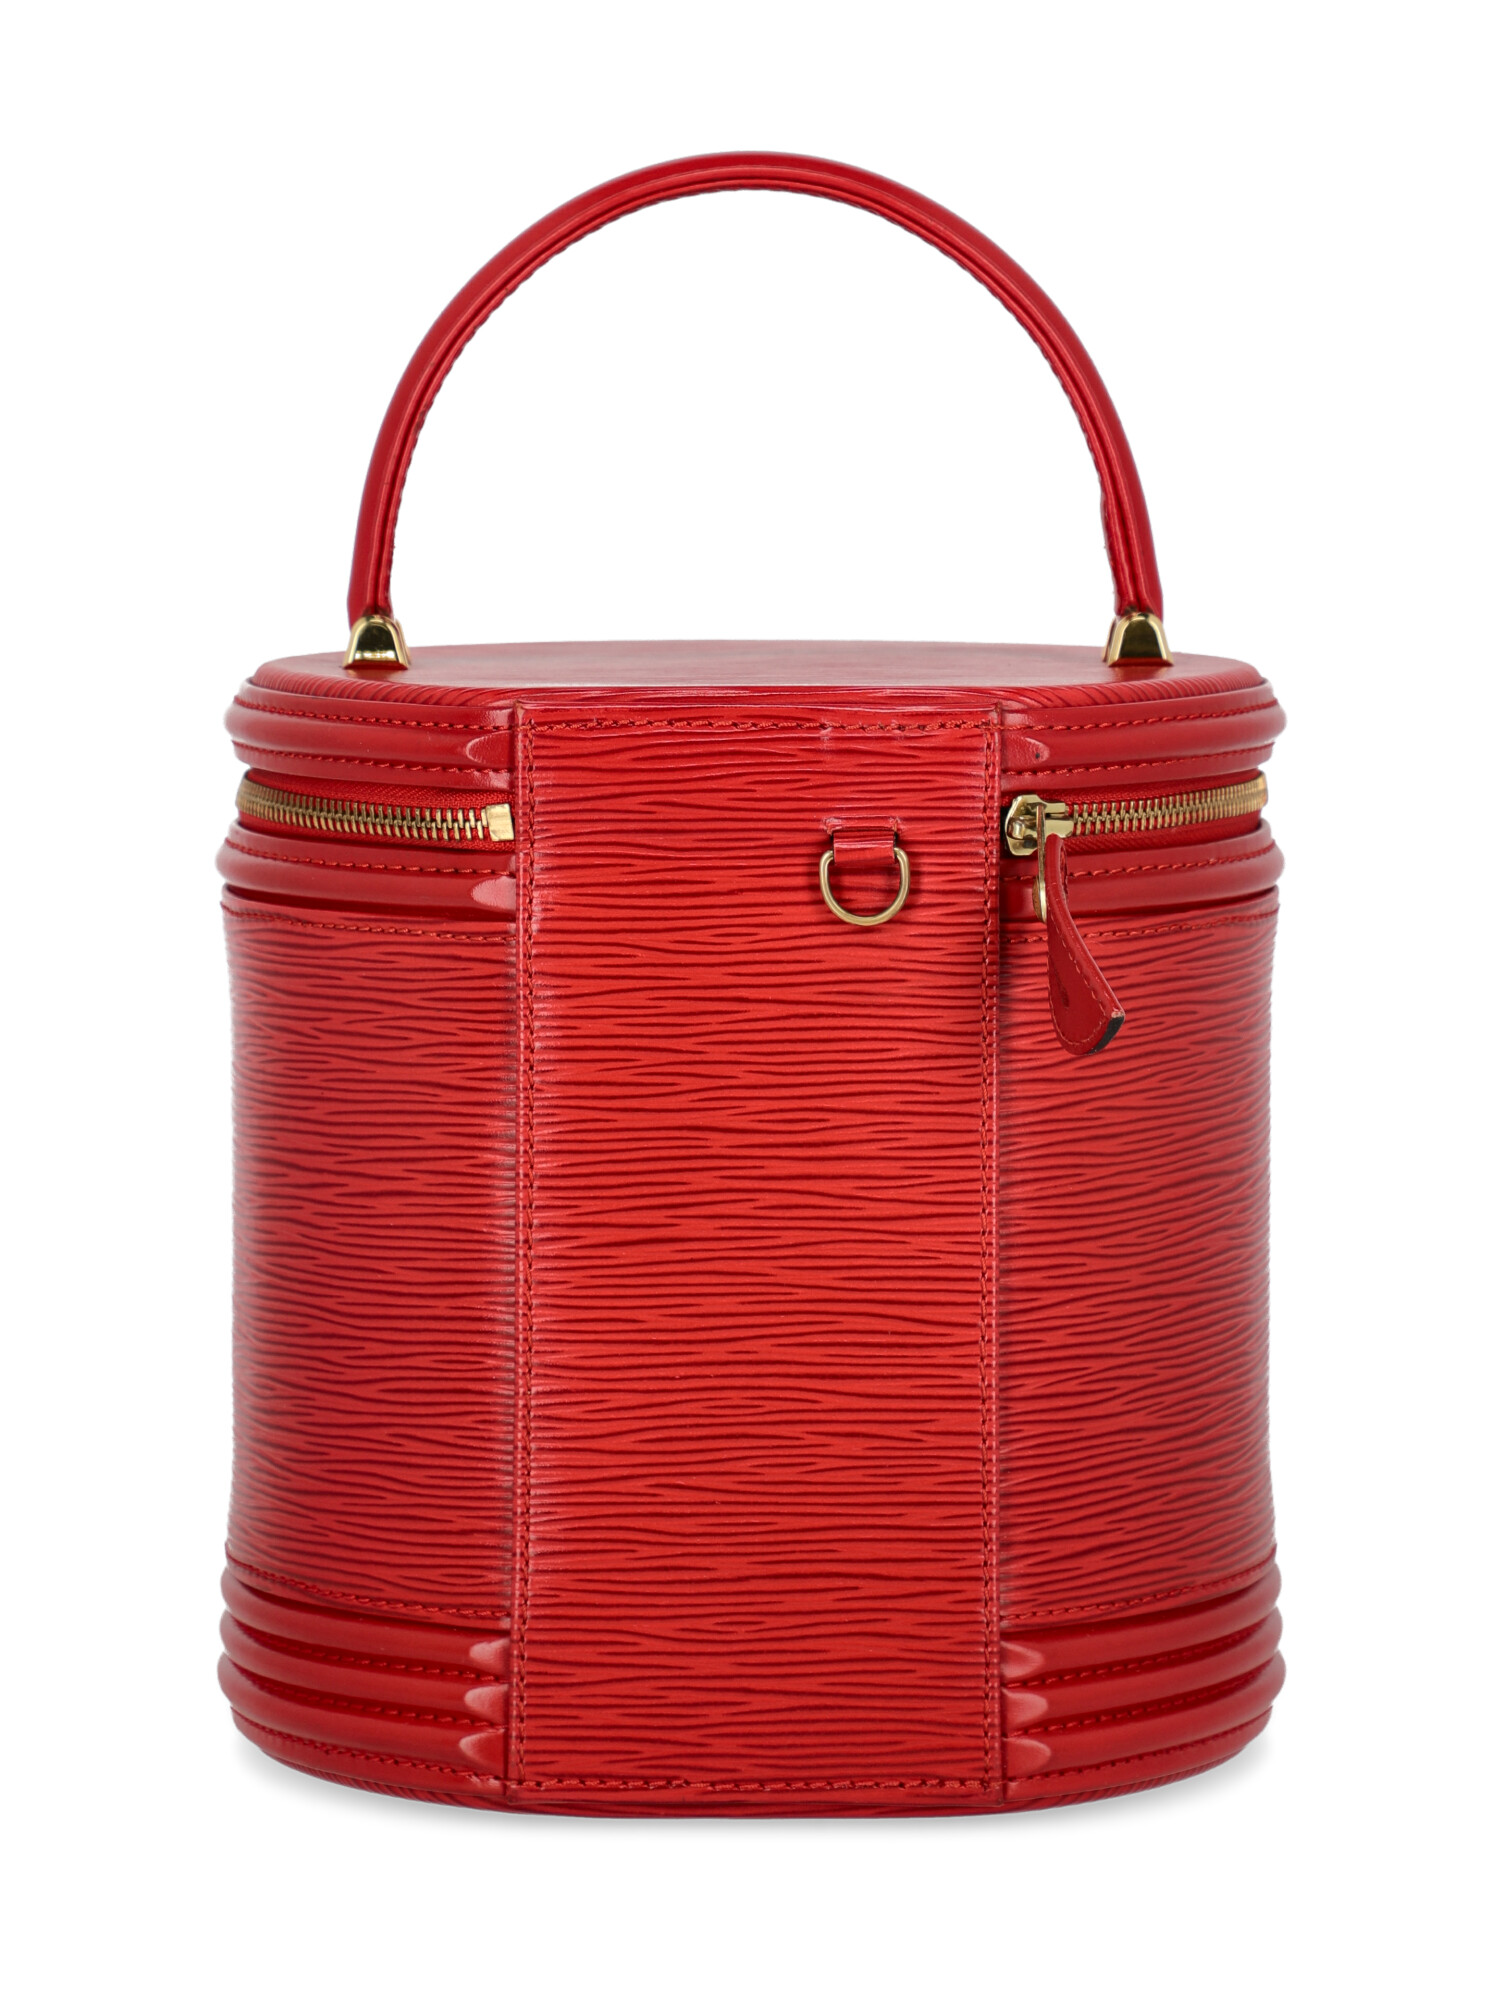 Louis Vuitton Special Price Women Handbags Red | eBay